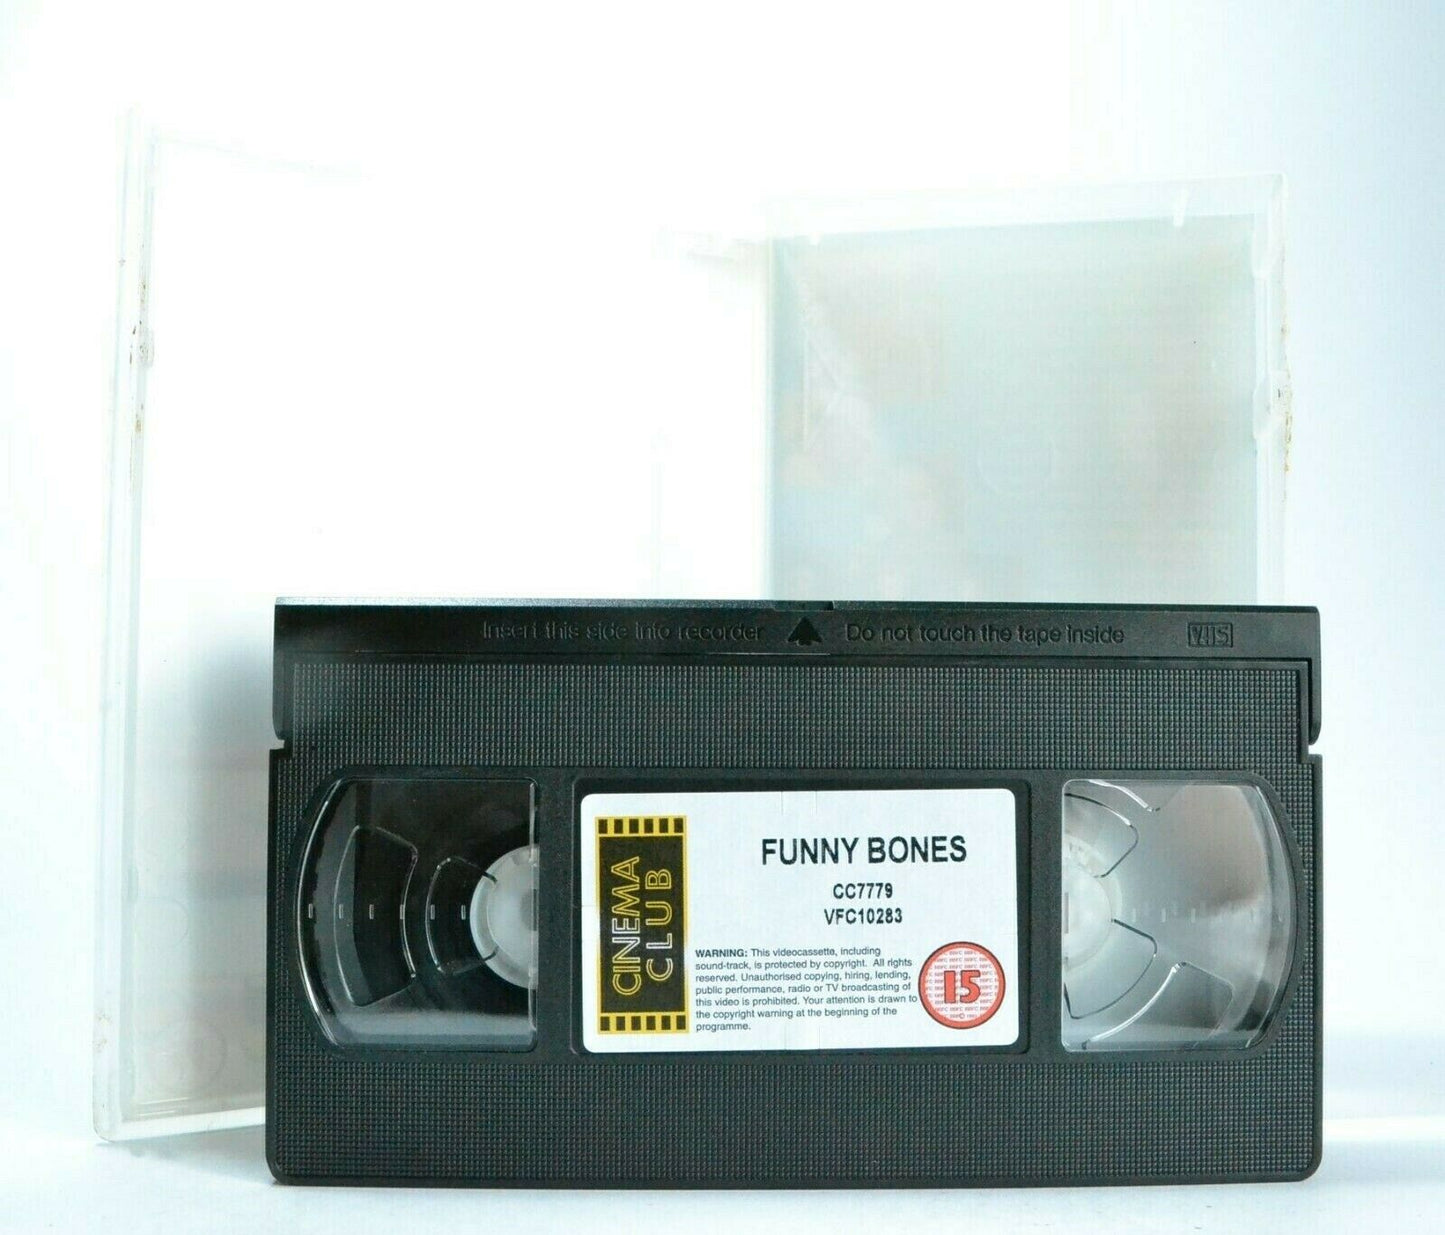 Funny Bones (1995): British/American Comedy Drama - Lee Evans/Jerry Lewis - VHS-